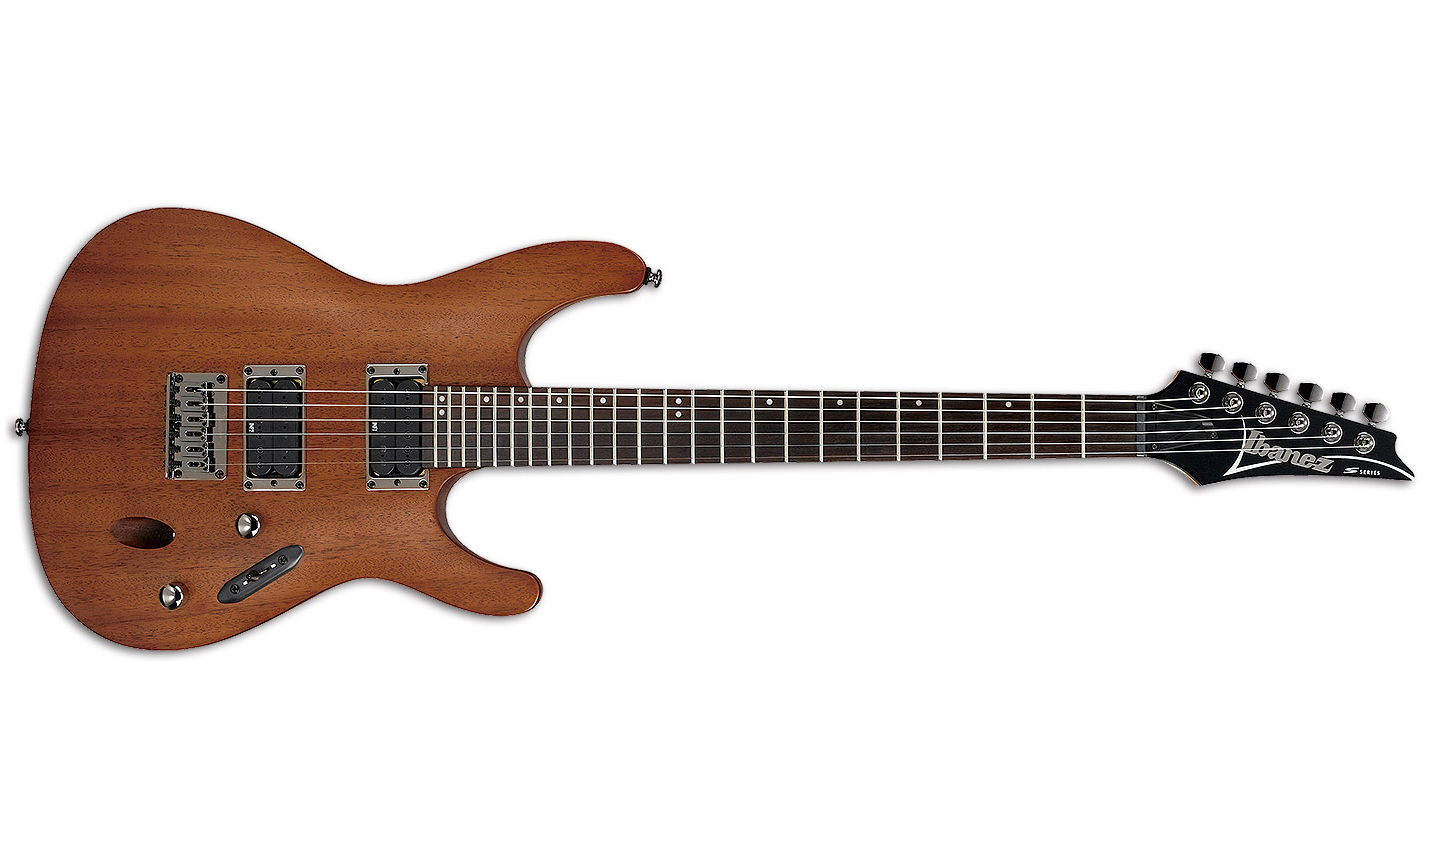 Ibanez S521 Mol Standard Hh Ht Jat - Mahogany Oil Finish - Str shape electric guitar - Variation 1